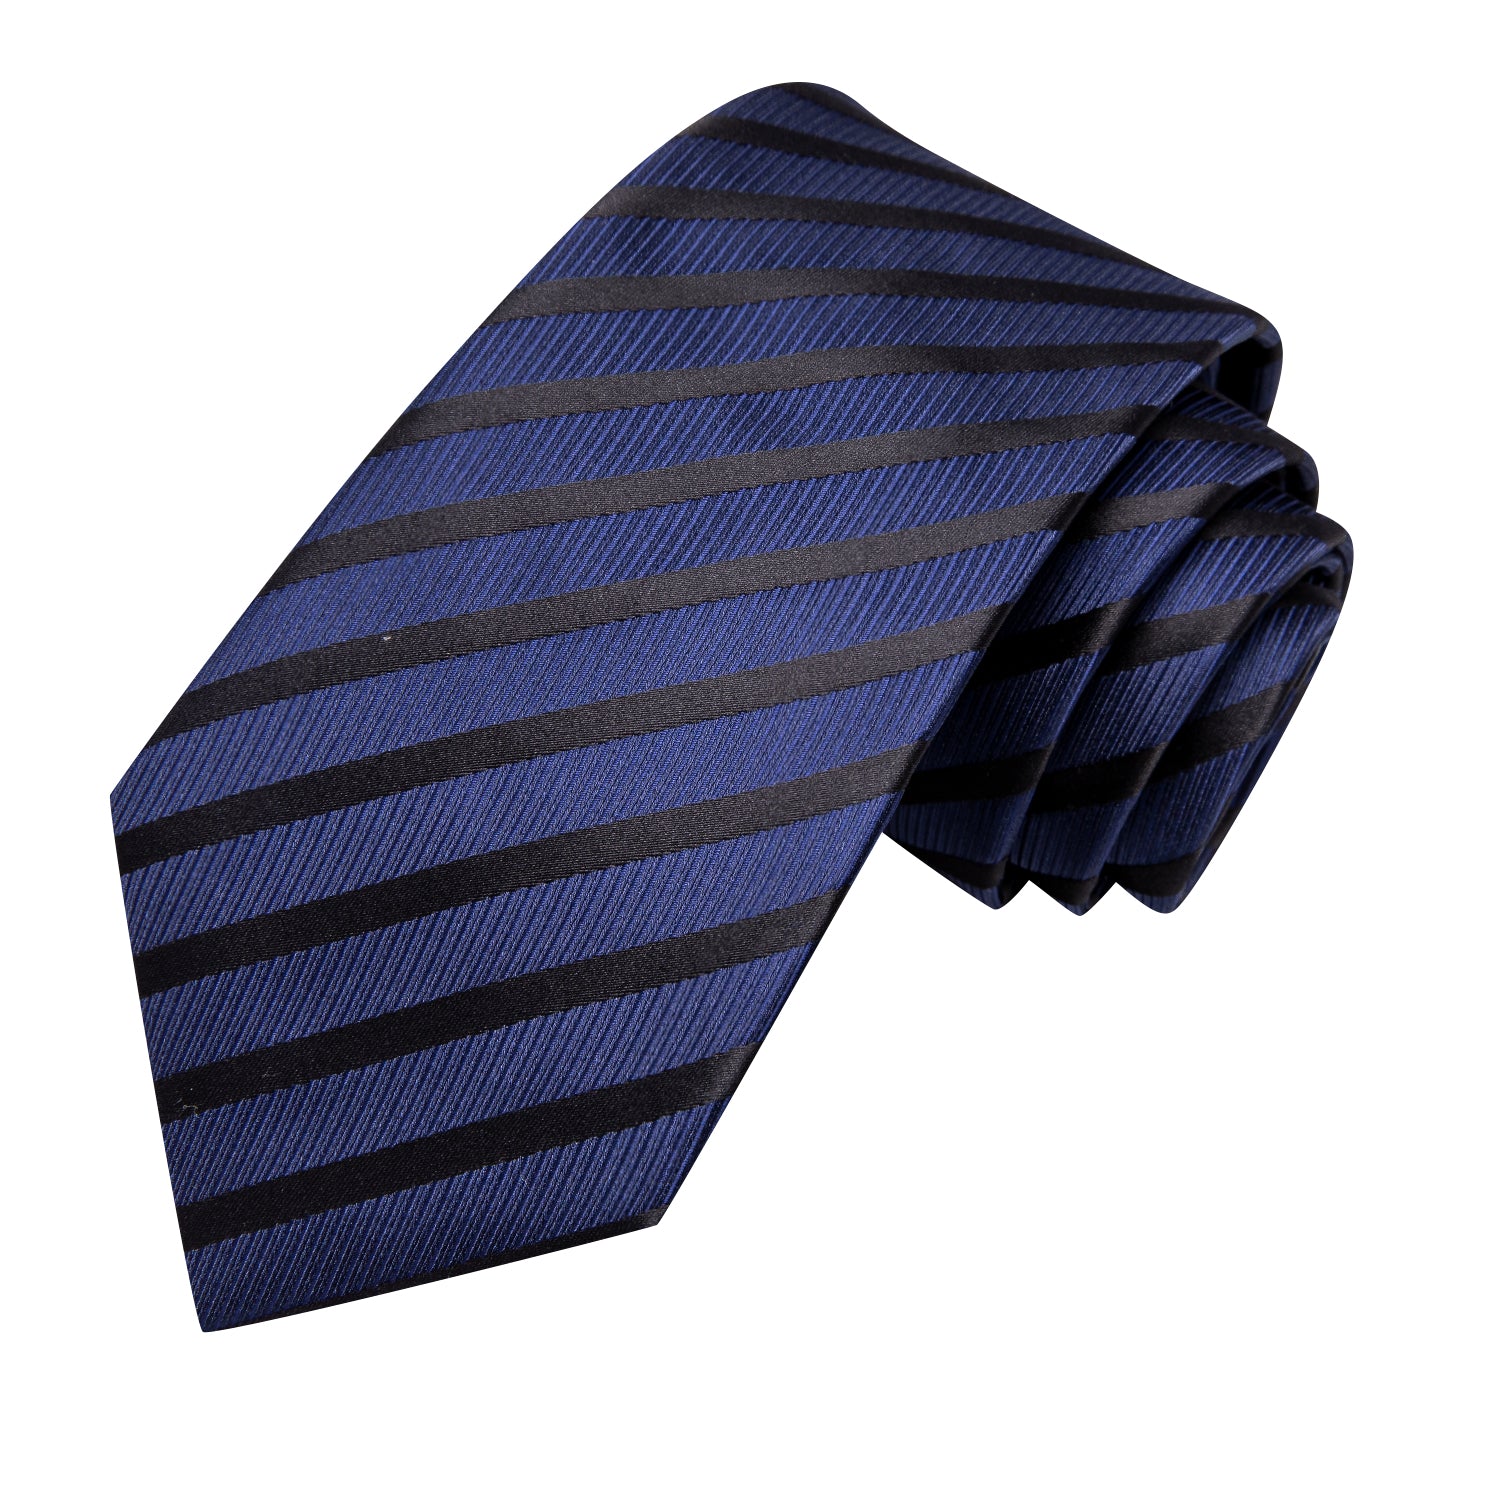 Hi-Tie Navy Blue Black Striped Men's Tie Pocket Square Cufflinks Set